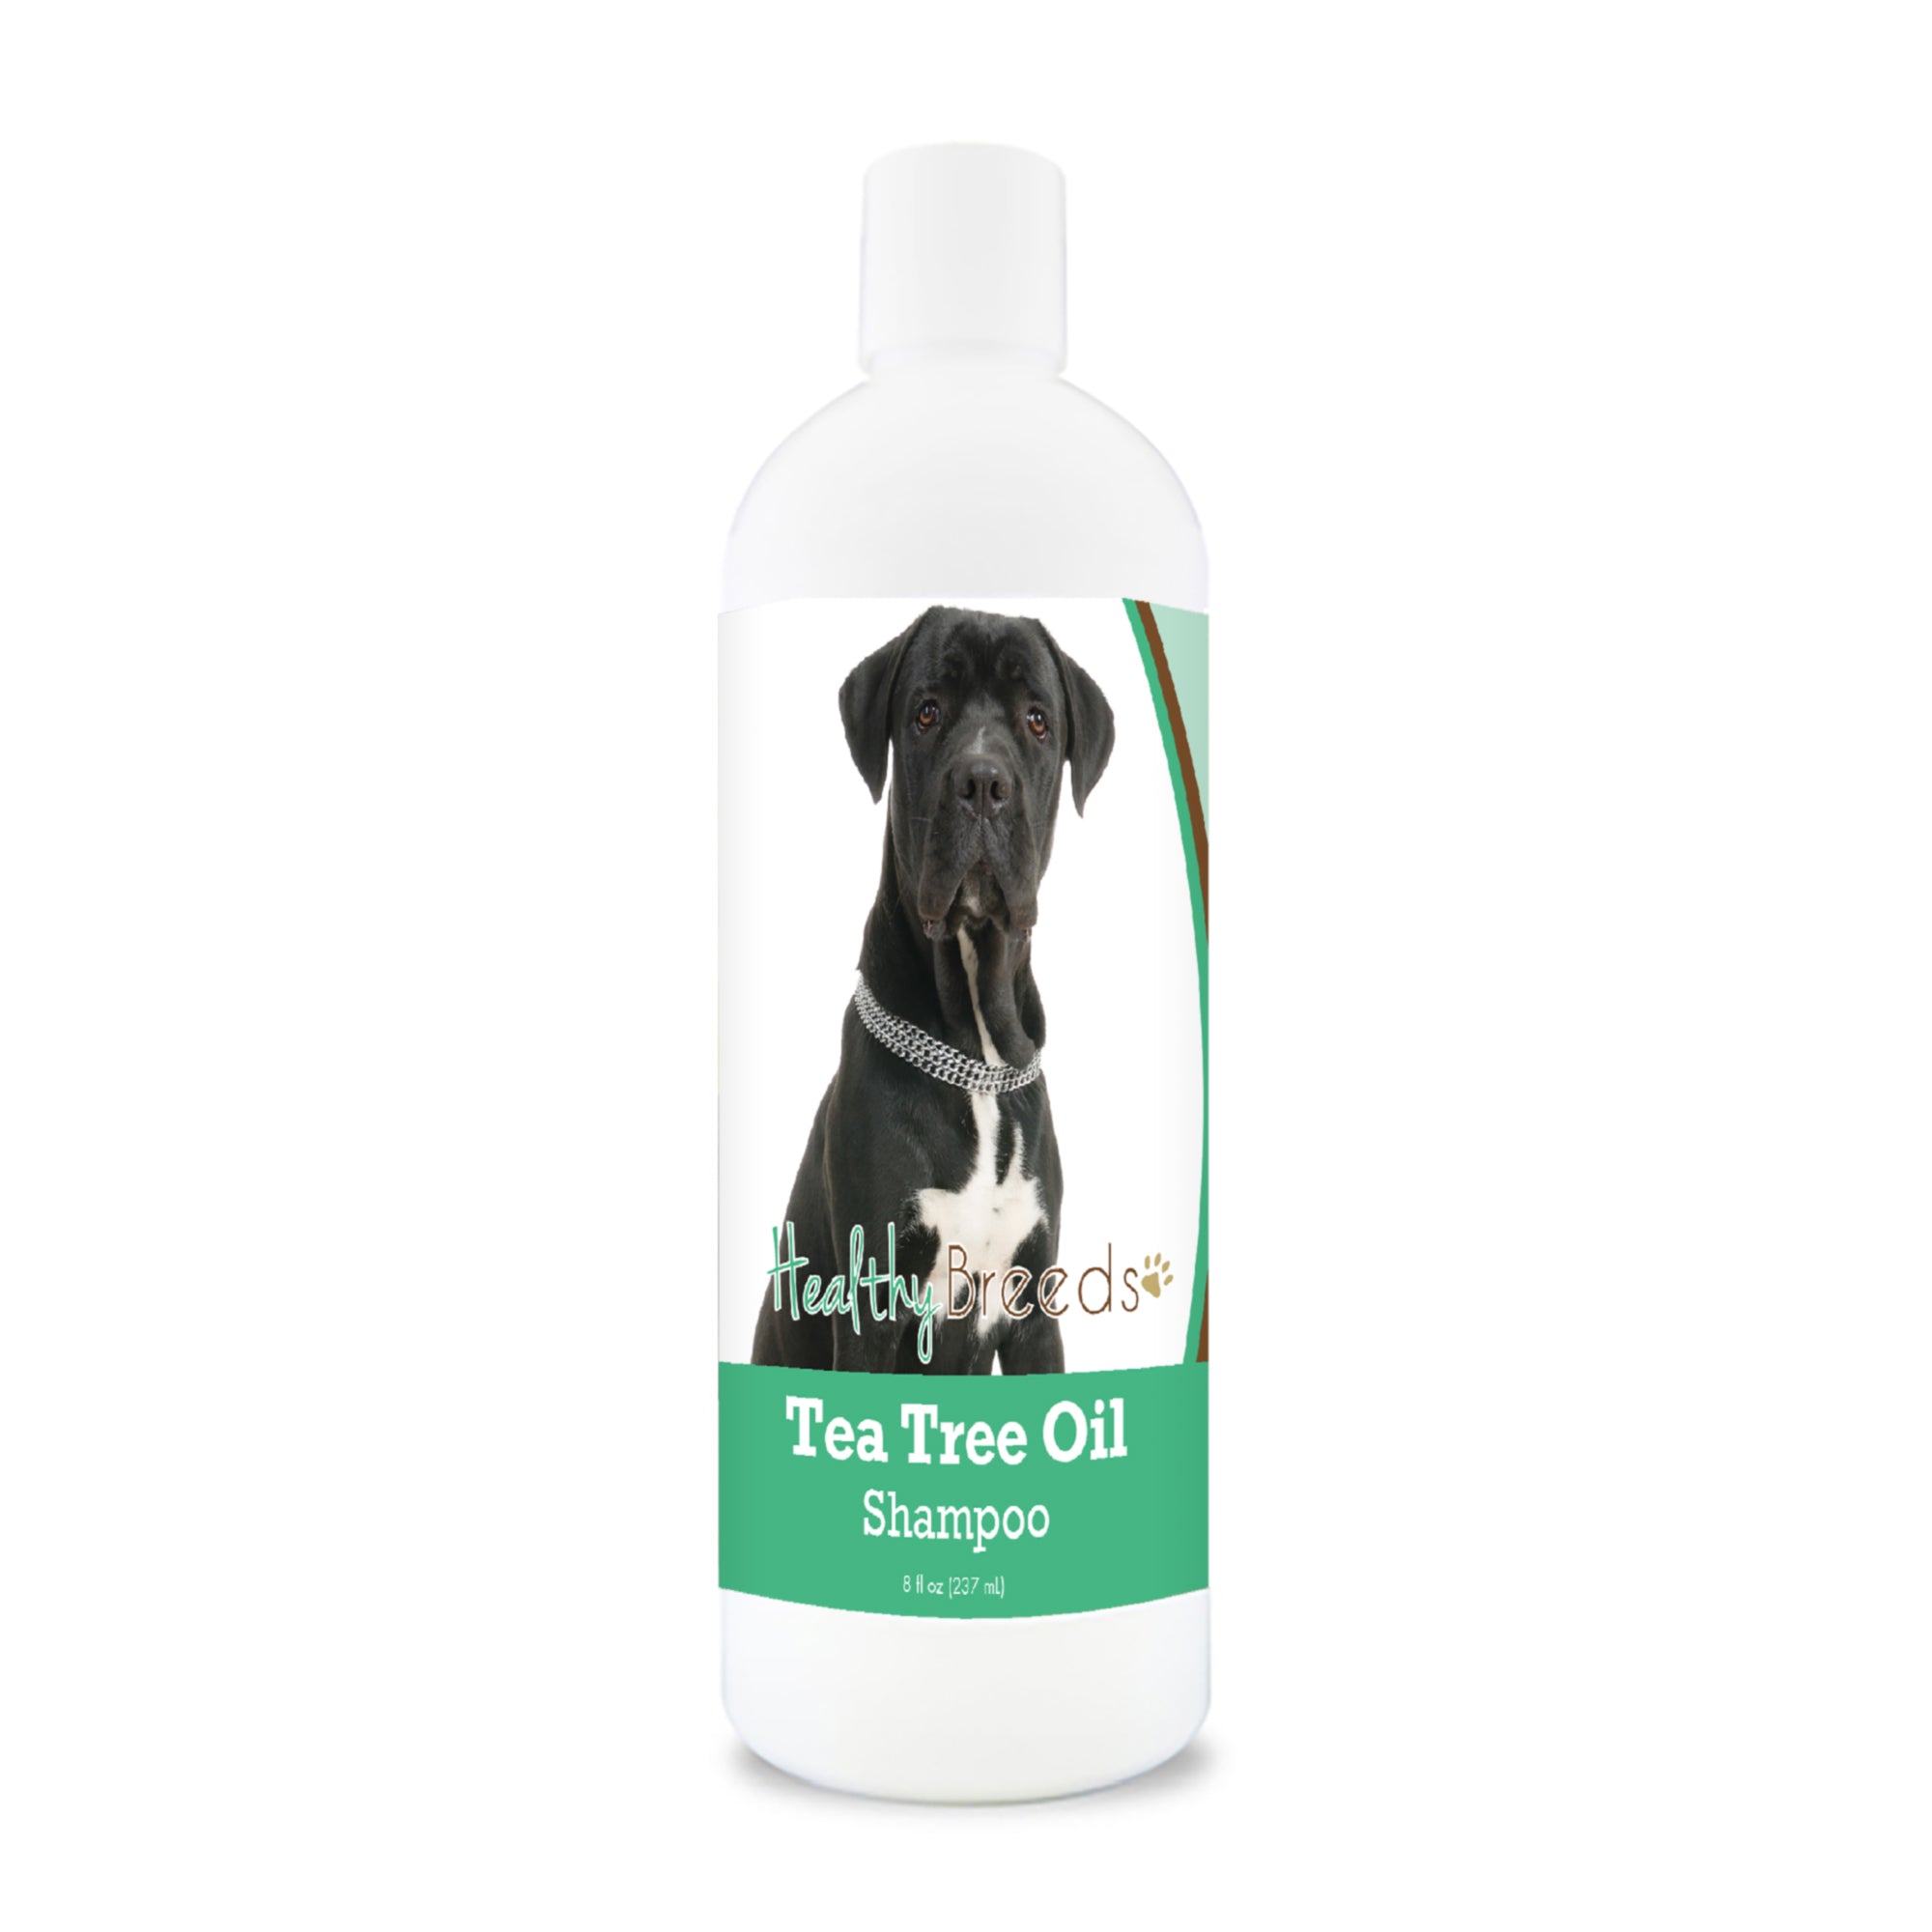 Cane Corso Tea Tree Oil Shampoo 8 oz